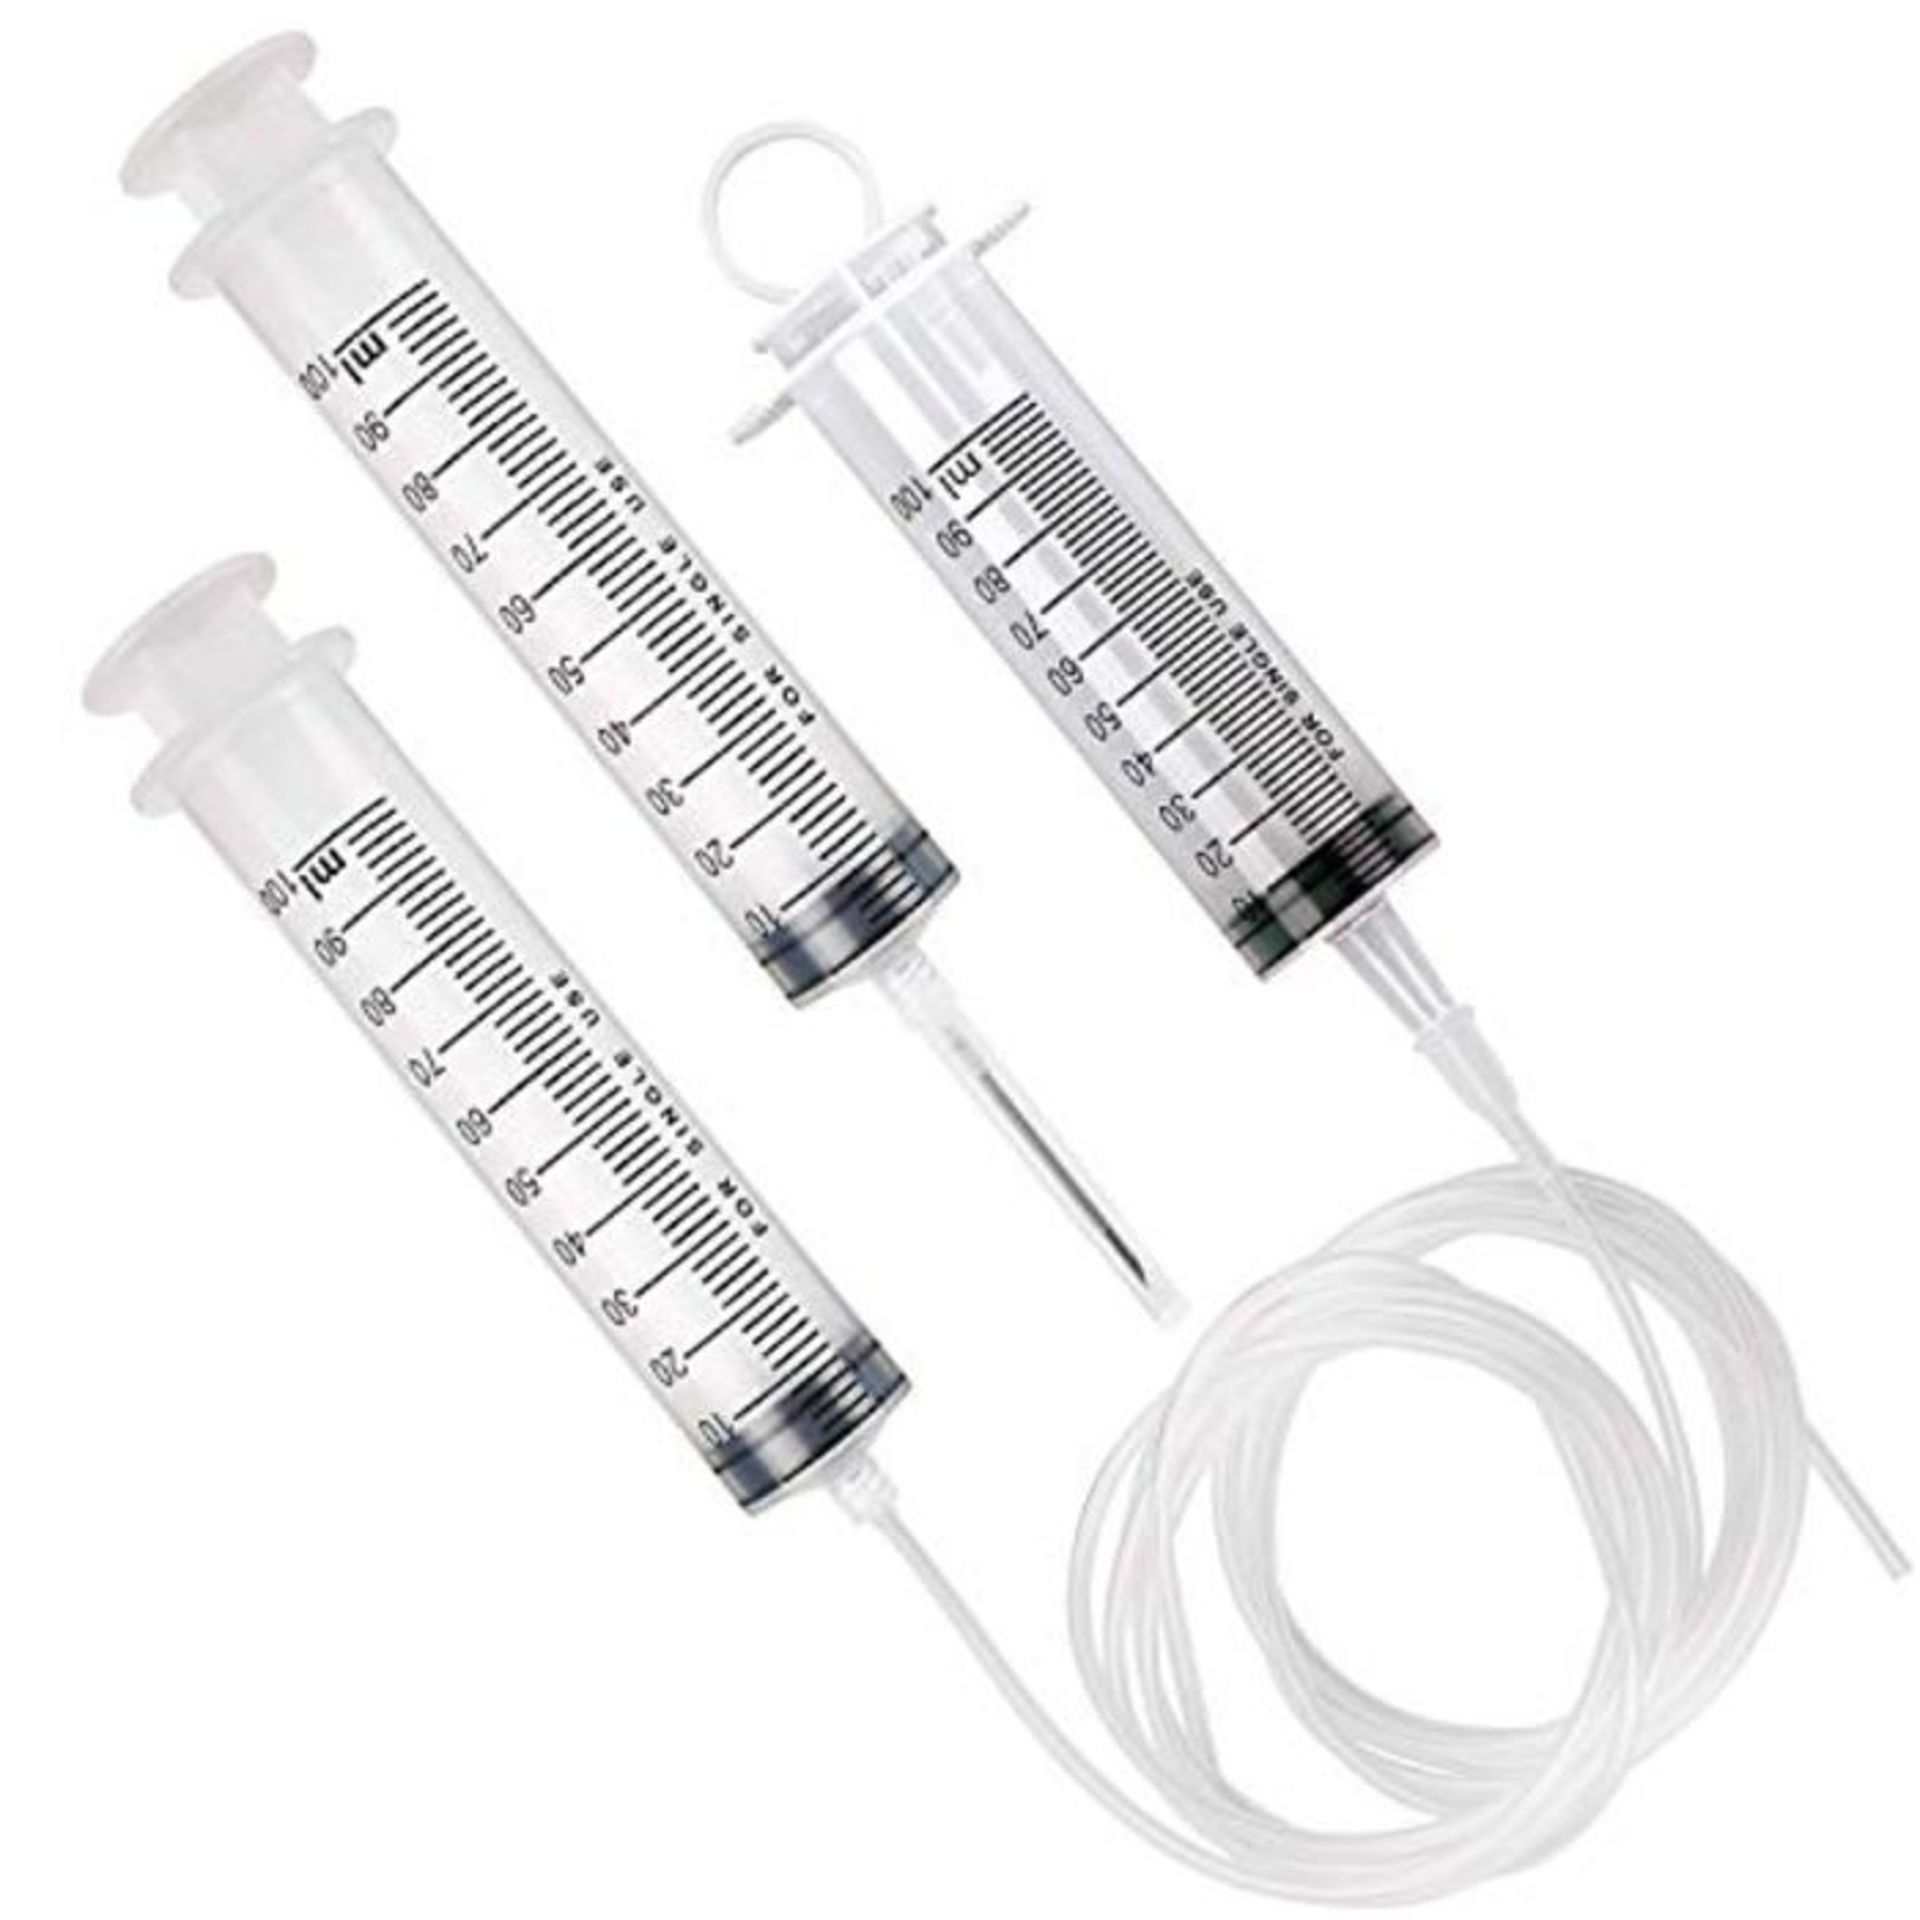 FEIGO 3Pack 100ml Large Plastic Syringe with Handy Plastic Tubing and Needle, Dispensi